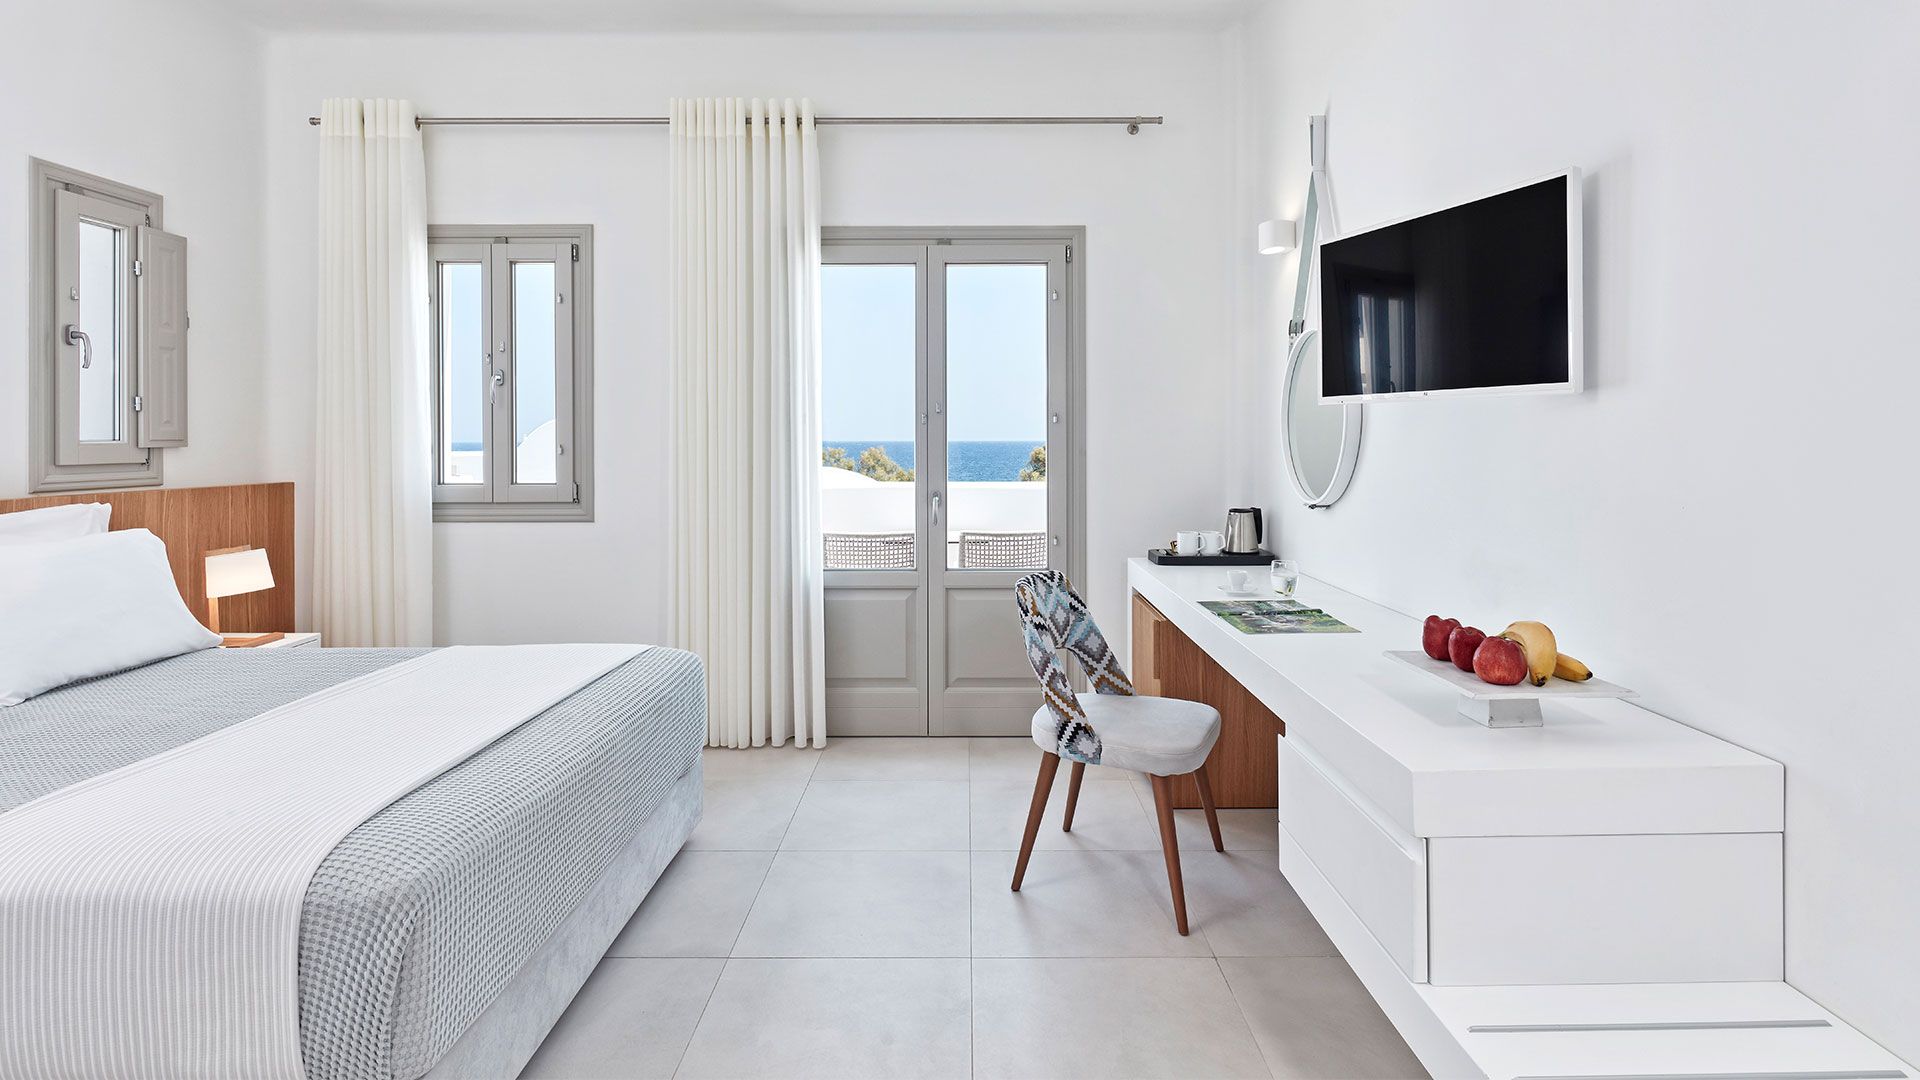 Interior Design of a 5-star Hotel, Kamari Beach, Santorini